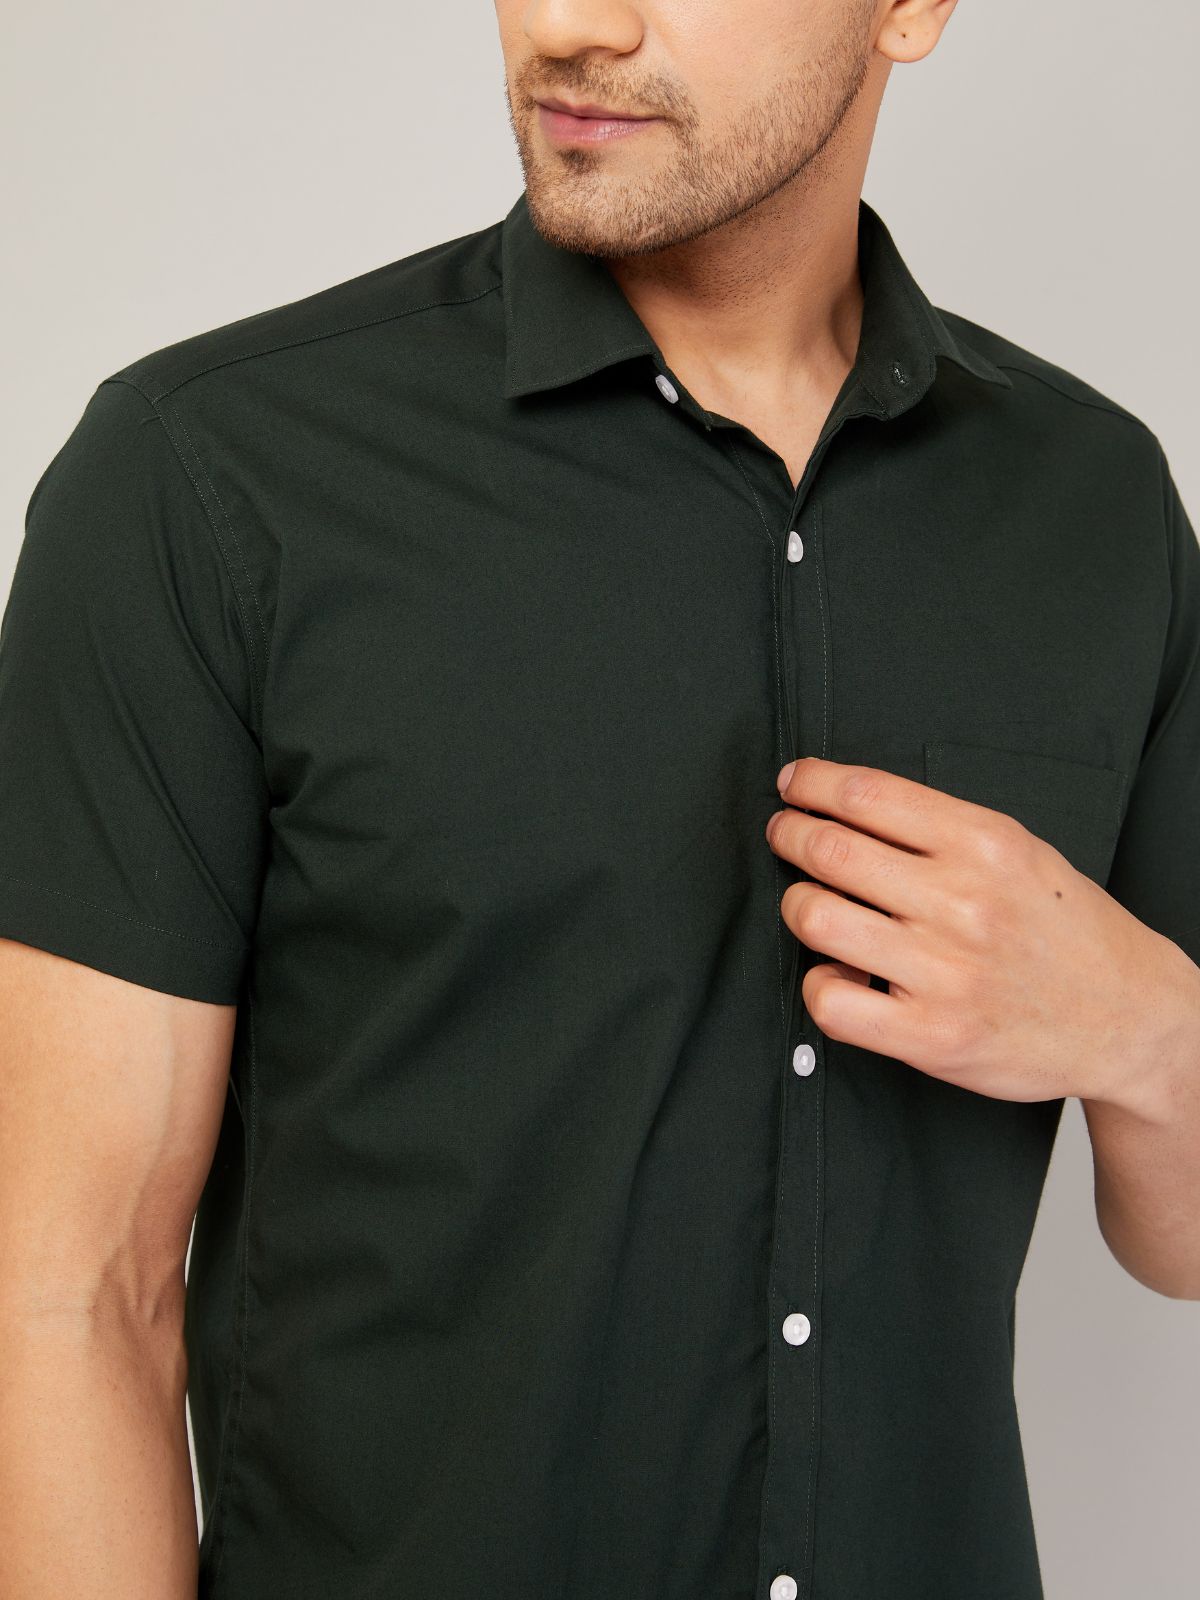 Louis Monarch Men Regular Fit Solid Dark Green Spread Collar Casual Half Shirt